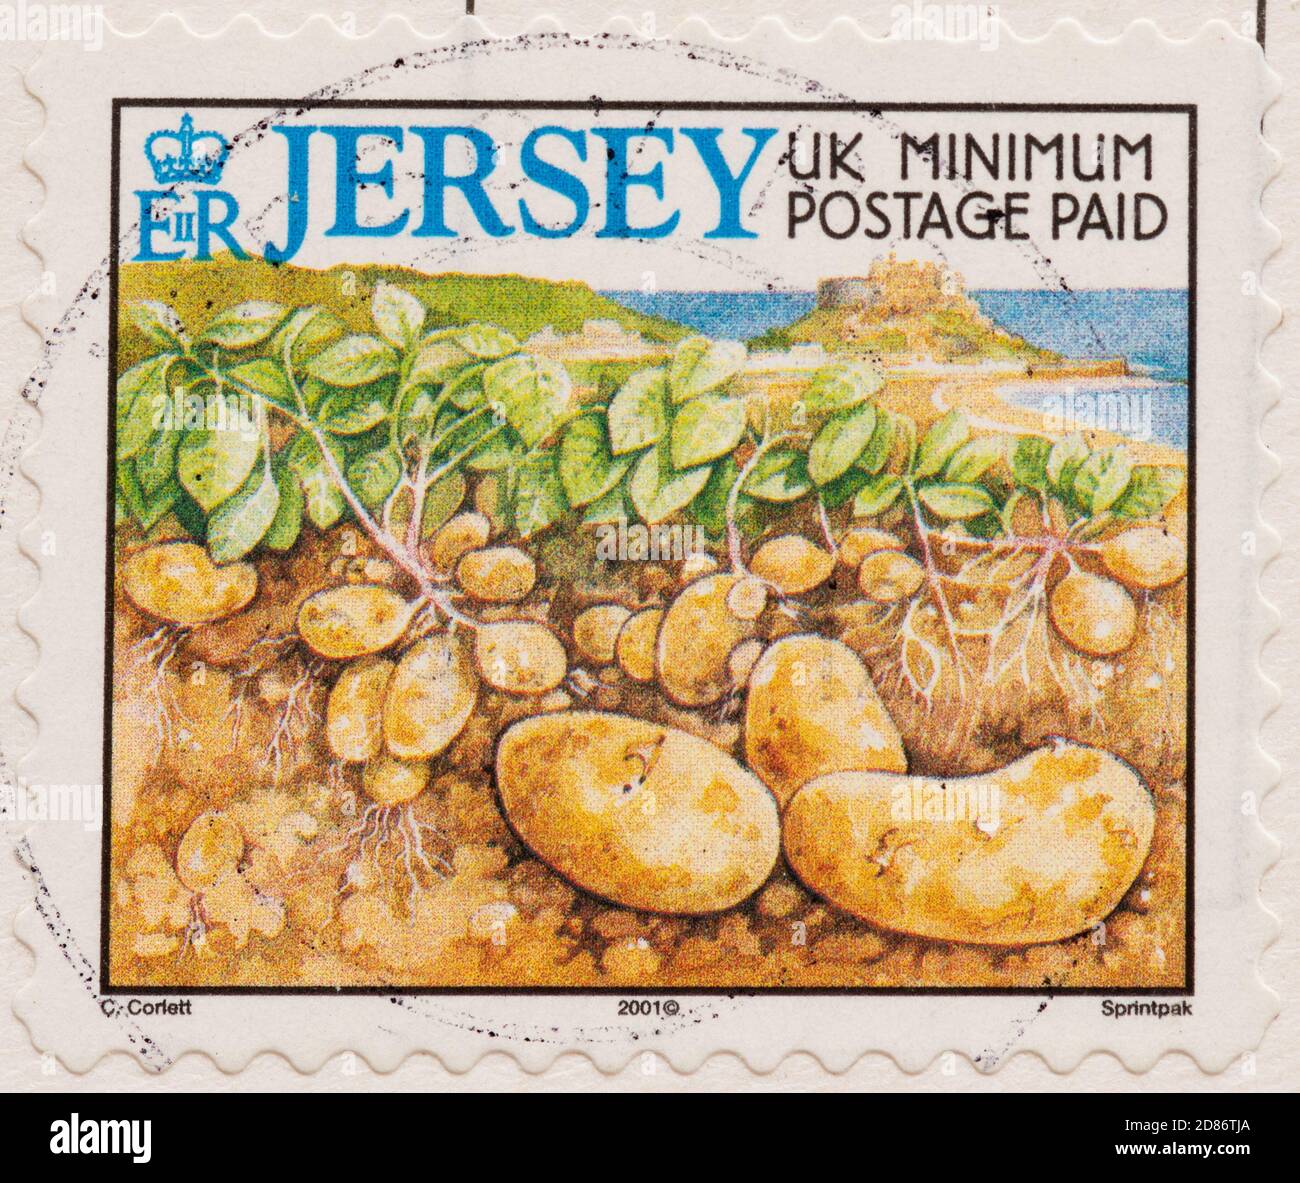 regelmatig Oceaan Verkeersopstopping Jersey Royal potato potatoes on Jersey postage stamp - 2001 Stock Photo -  Alamy